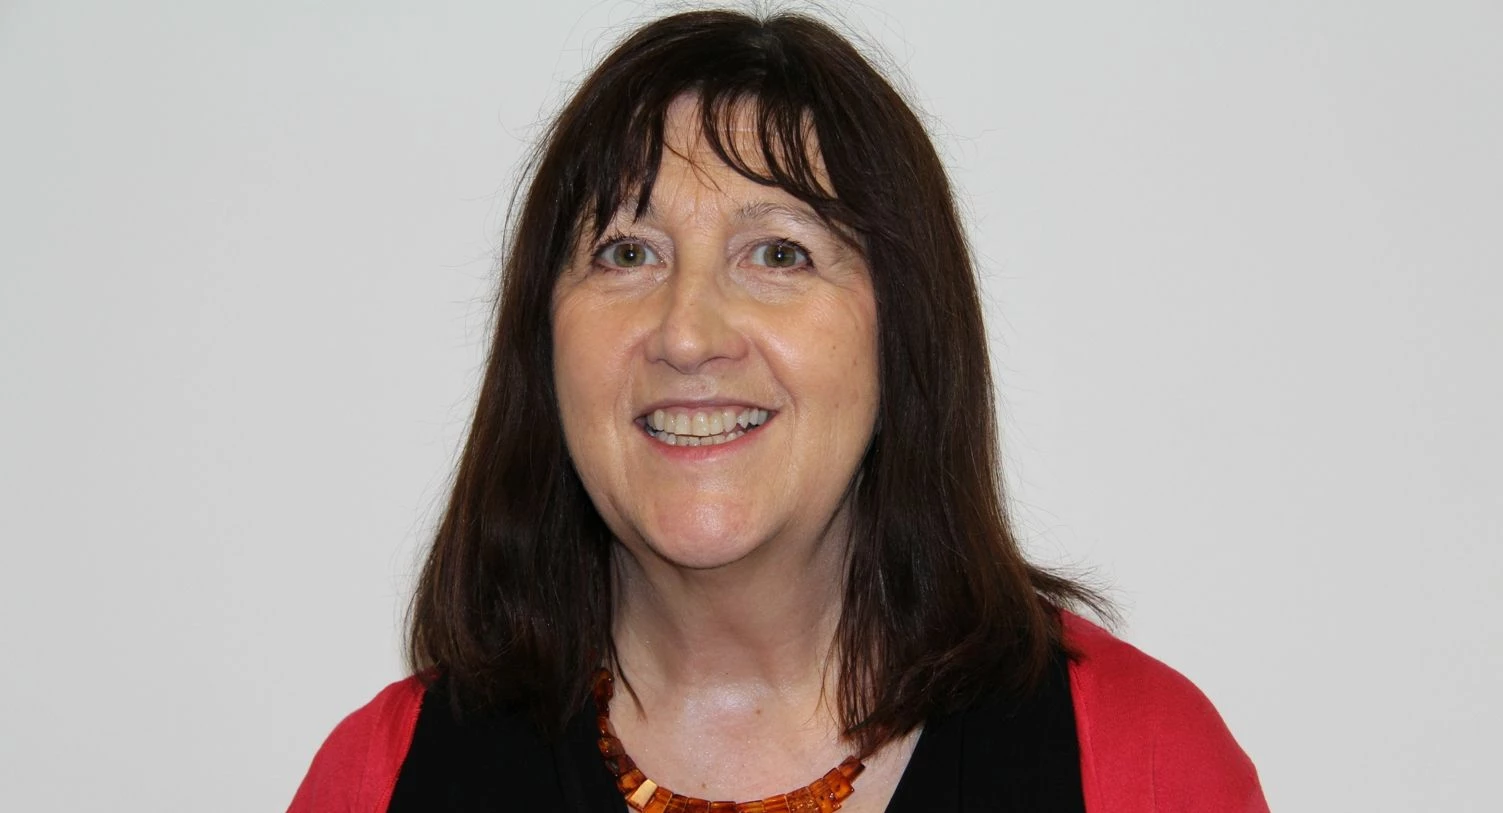 Professor Lynn Martin, Director of the Manchester Metropolitan University (MMU) Centre for Enterpris